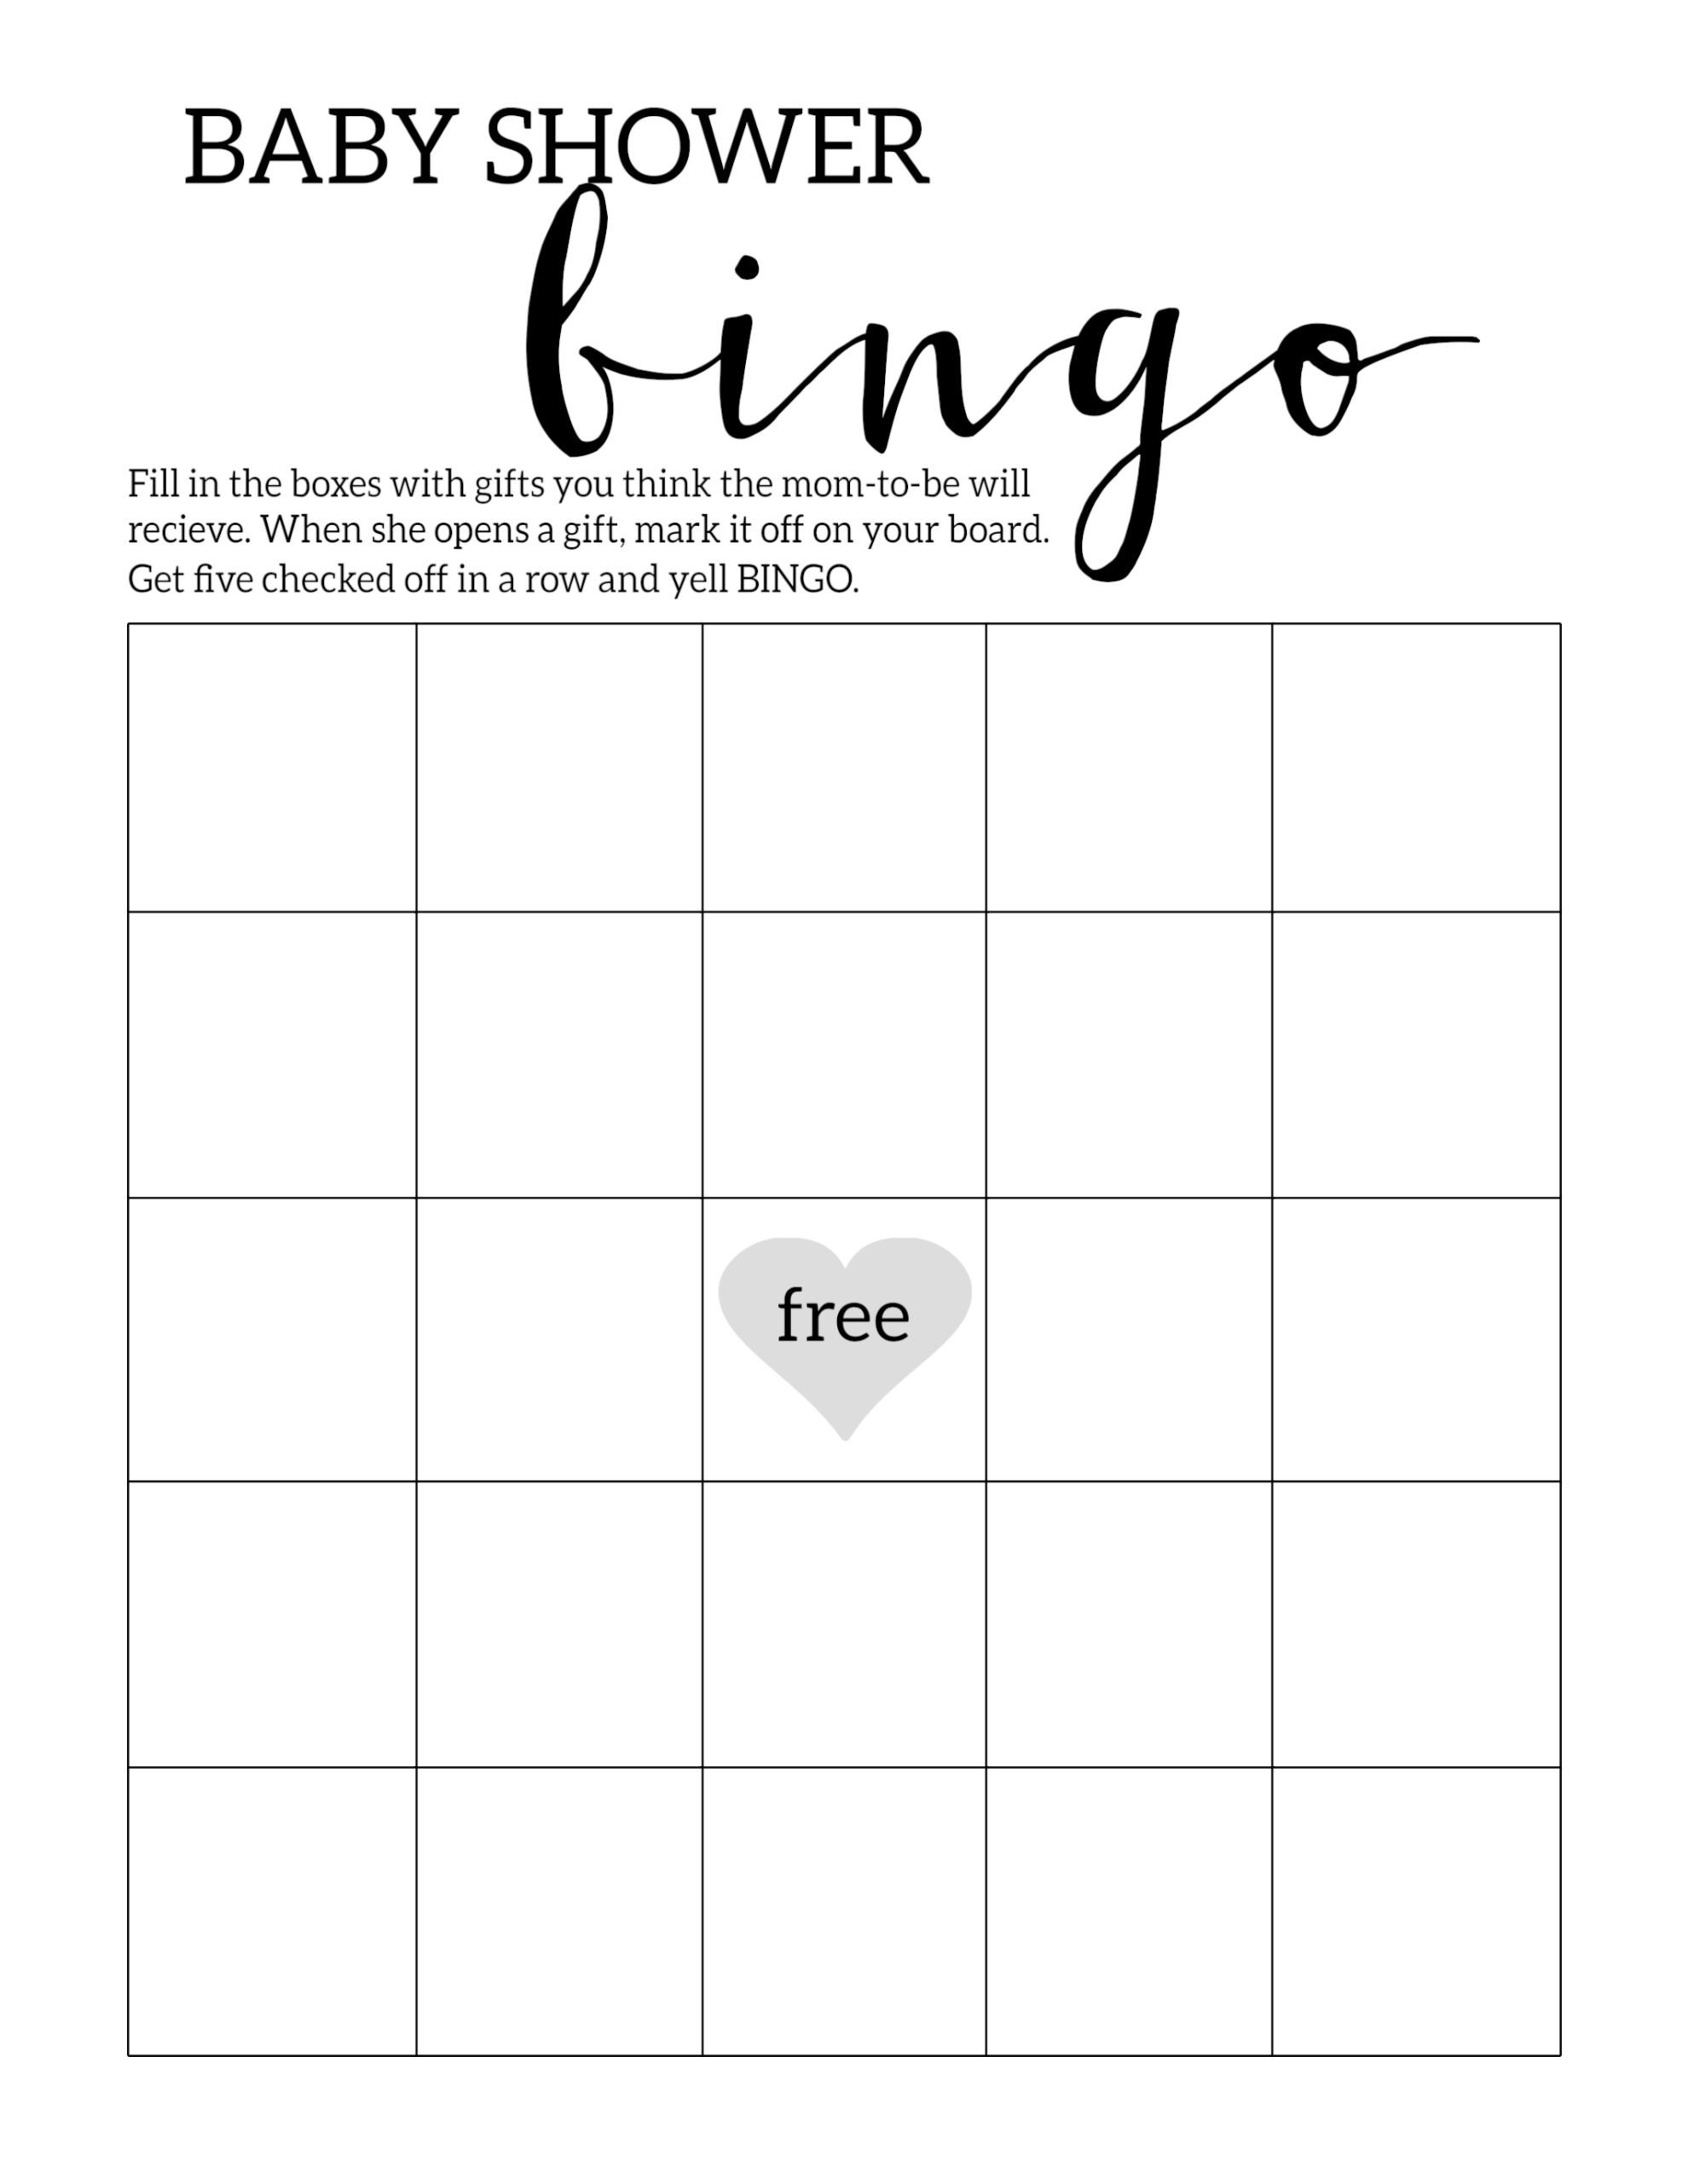 Baby Shower Bingo Printable Cards Template - Paper Trail Design - Free Printable Baby Shower Bingo Cards